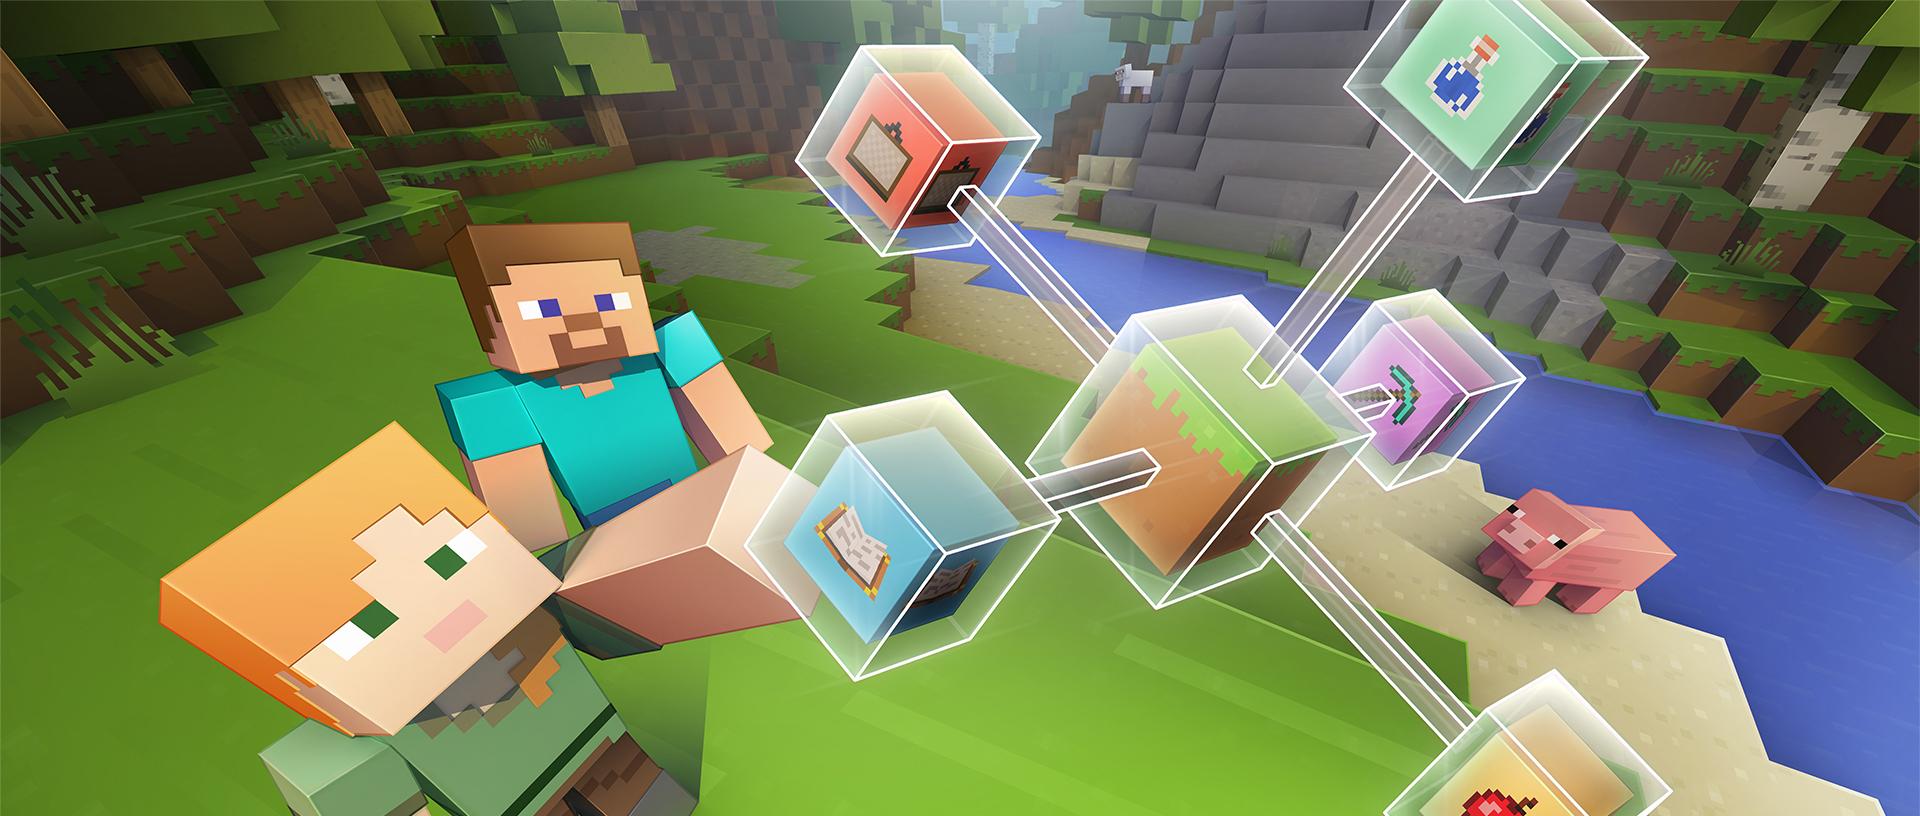 Microsoft vai lançar Minecraft: Education Edition